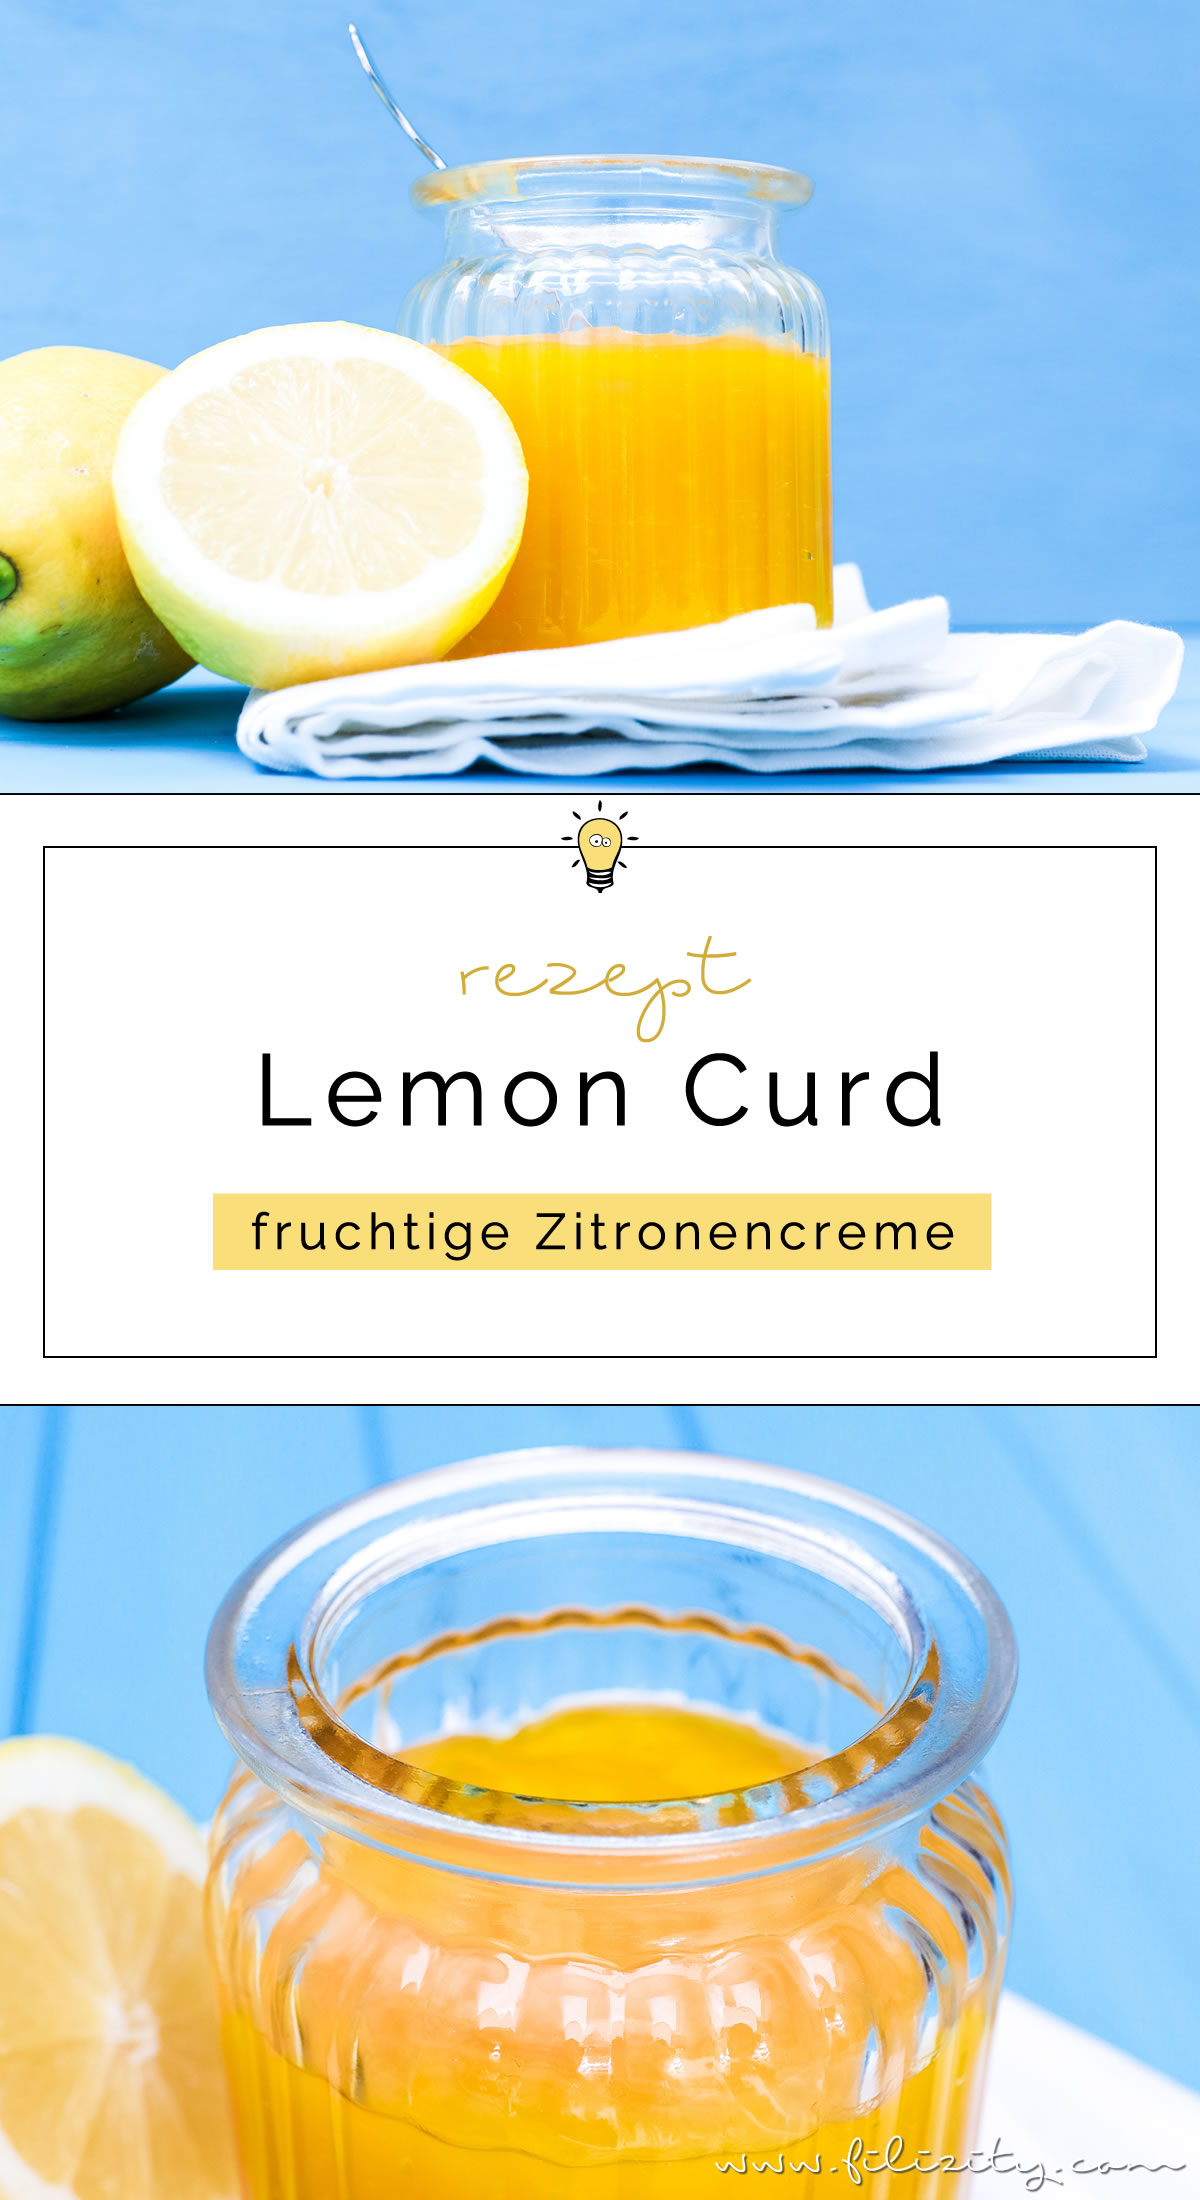 Lemon Curd Rezept: Lemon Curd selber machen - Mein bestes Rezept | Als Brotaufstrich, Tortenfüllung oder Tortenguss zum Lemon Curd Cheesecake | Filizity.com | Food-Blog aus dem Rheinland #lemoncurd #sommer